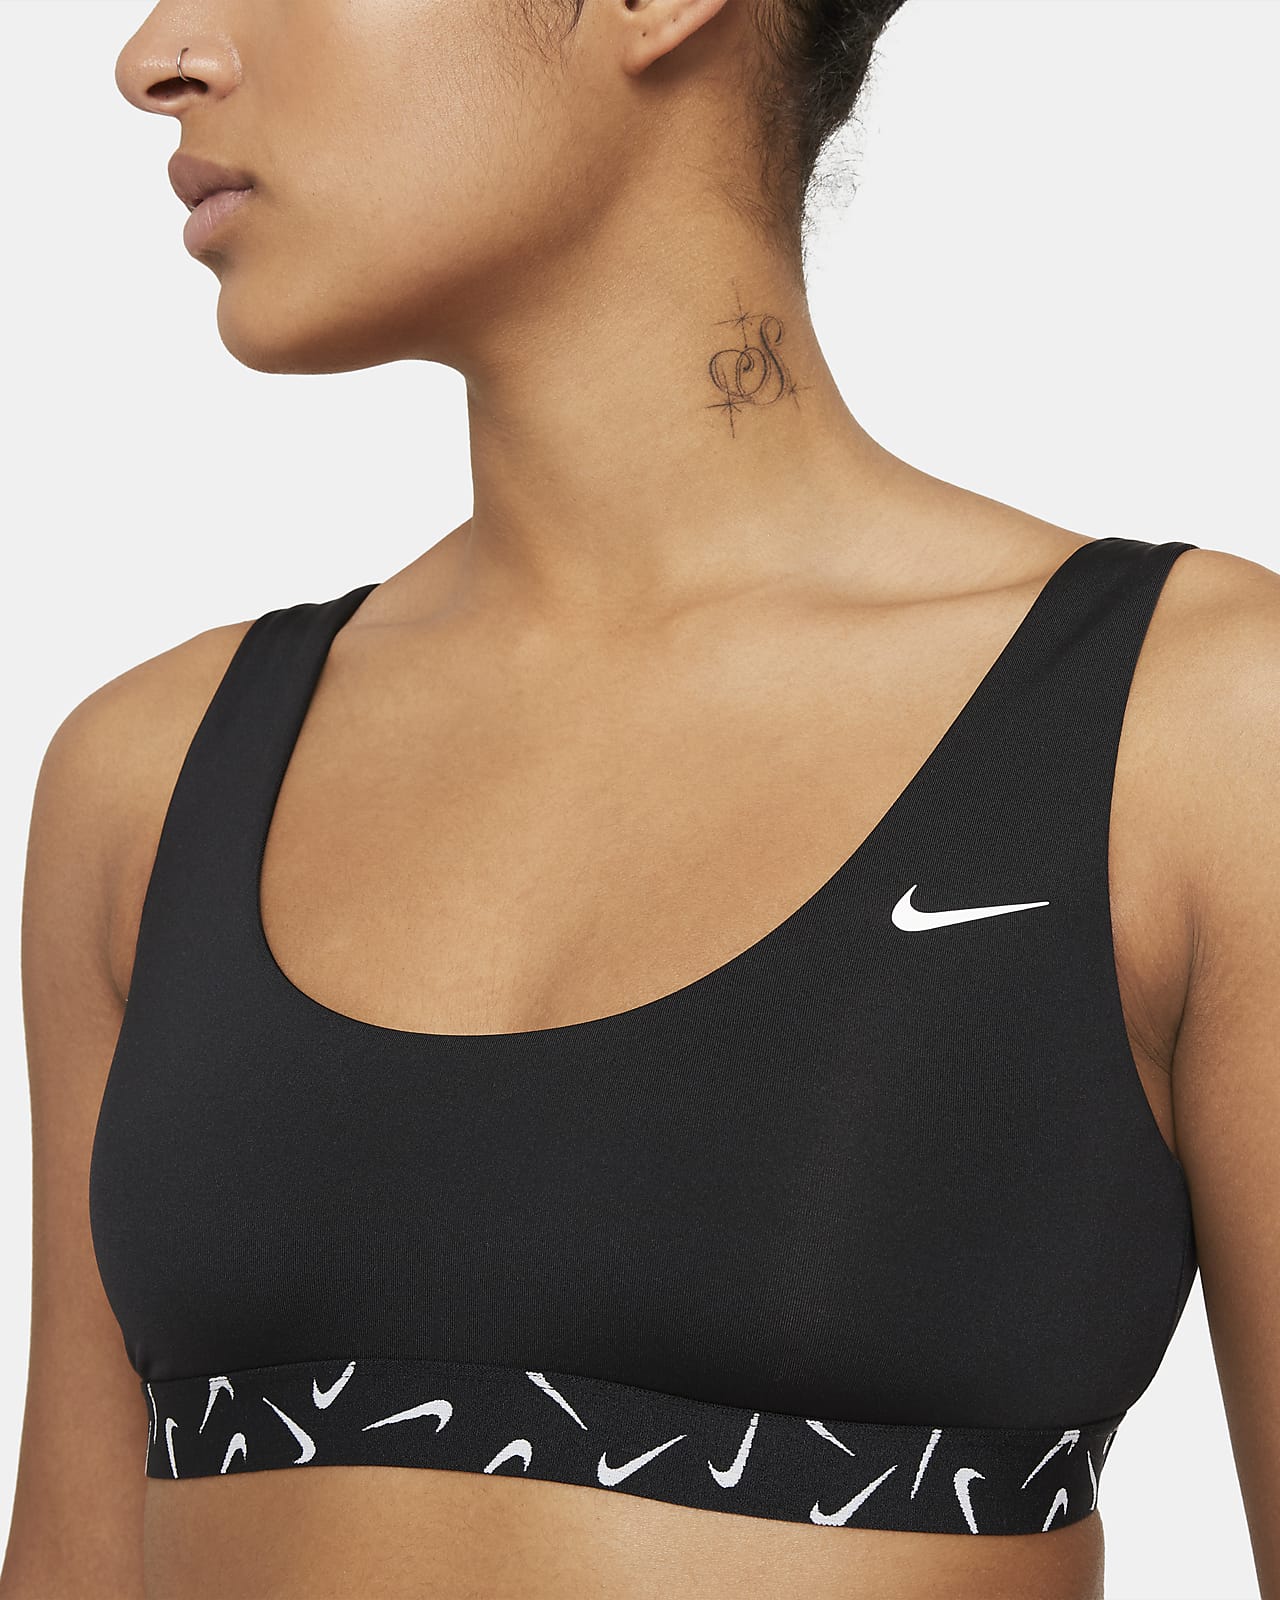 Picket ukendt forarbejdning Nike Women's Scoop-Neck Bikini Top. Nike LU